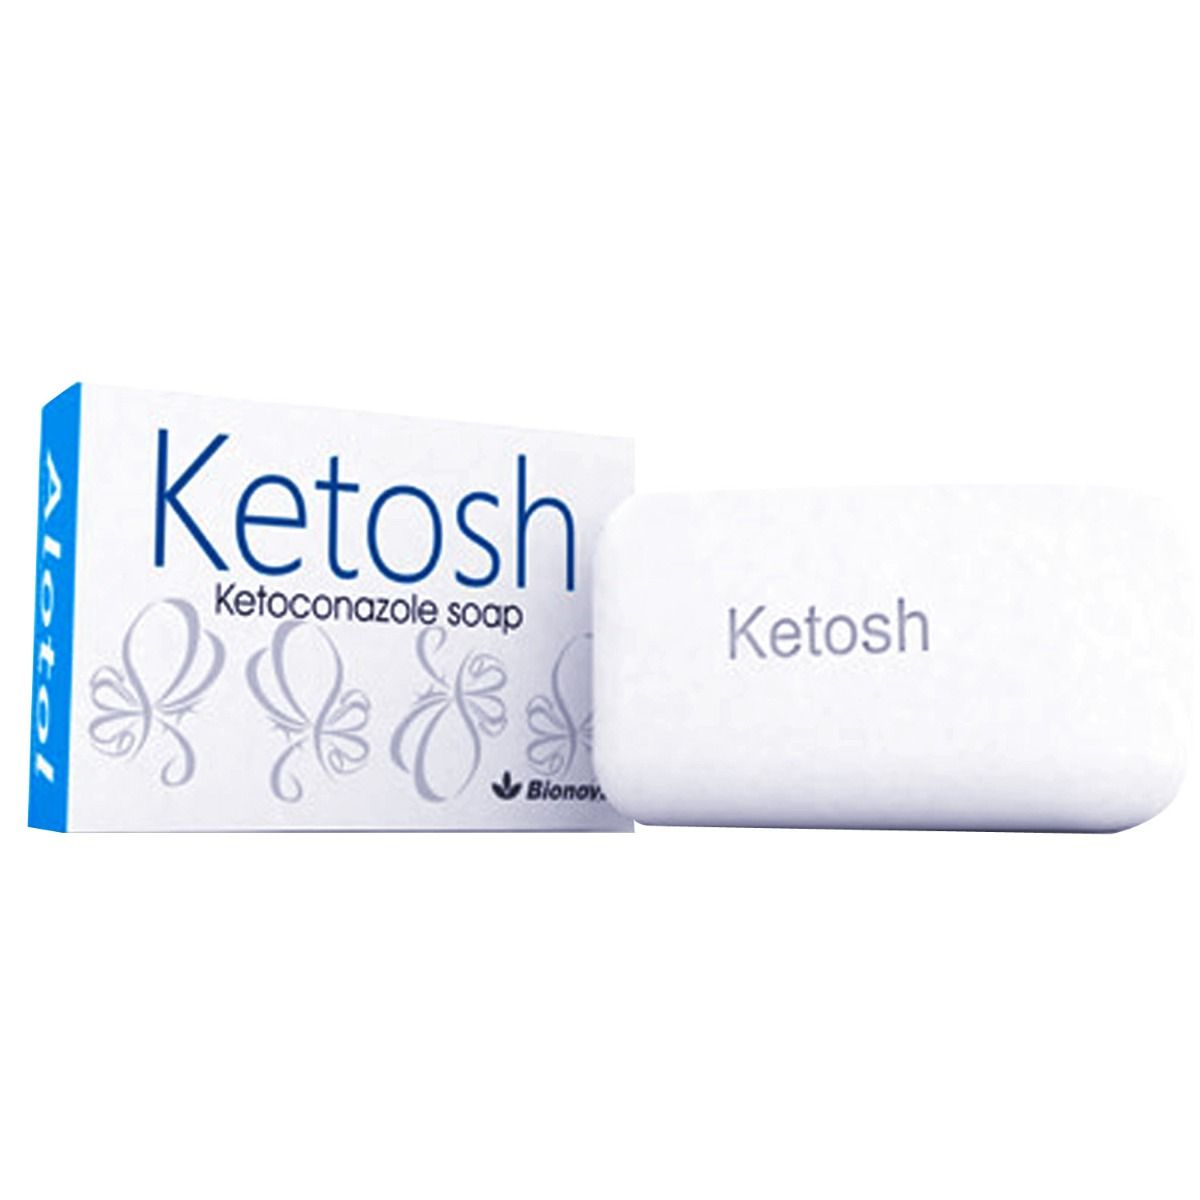 Buy Ketosh Soap, 75 gm Online